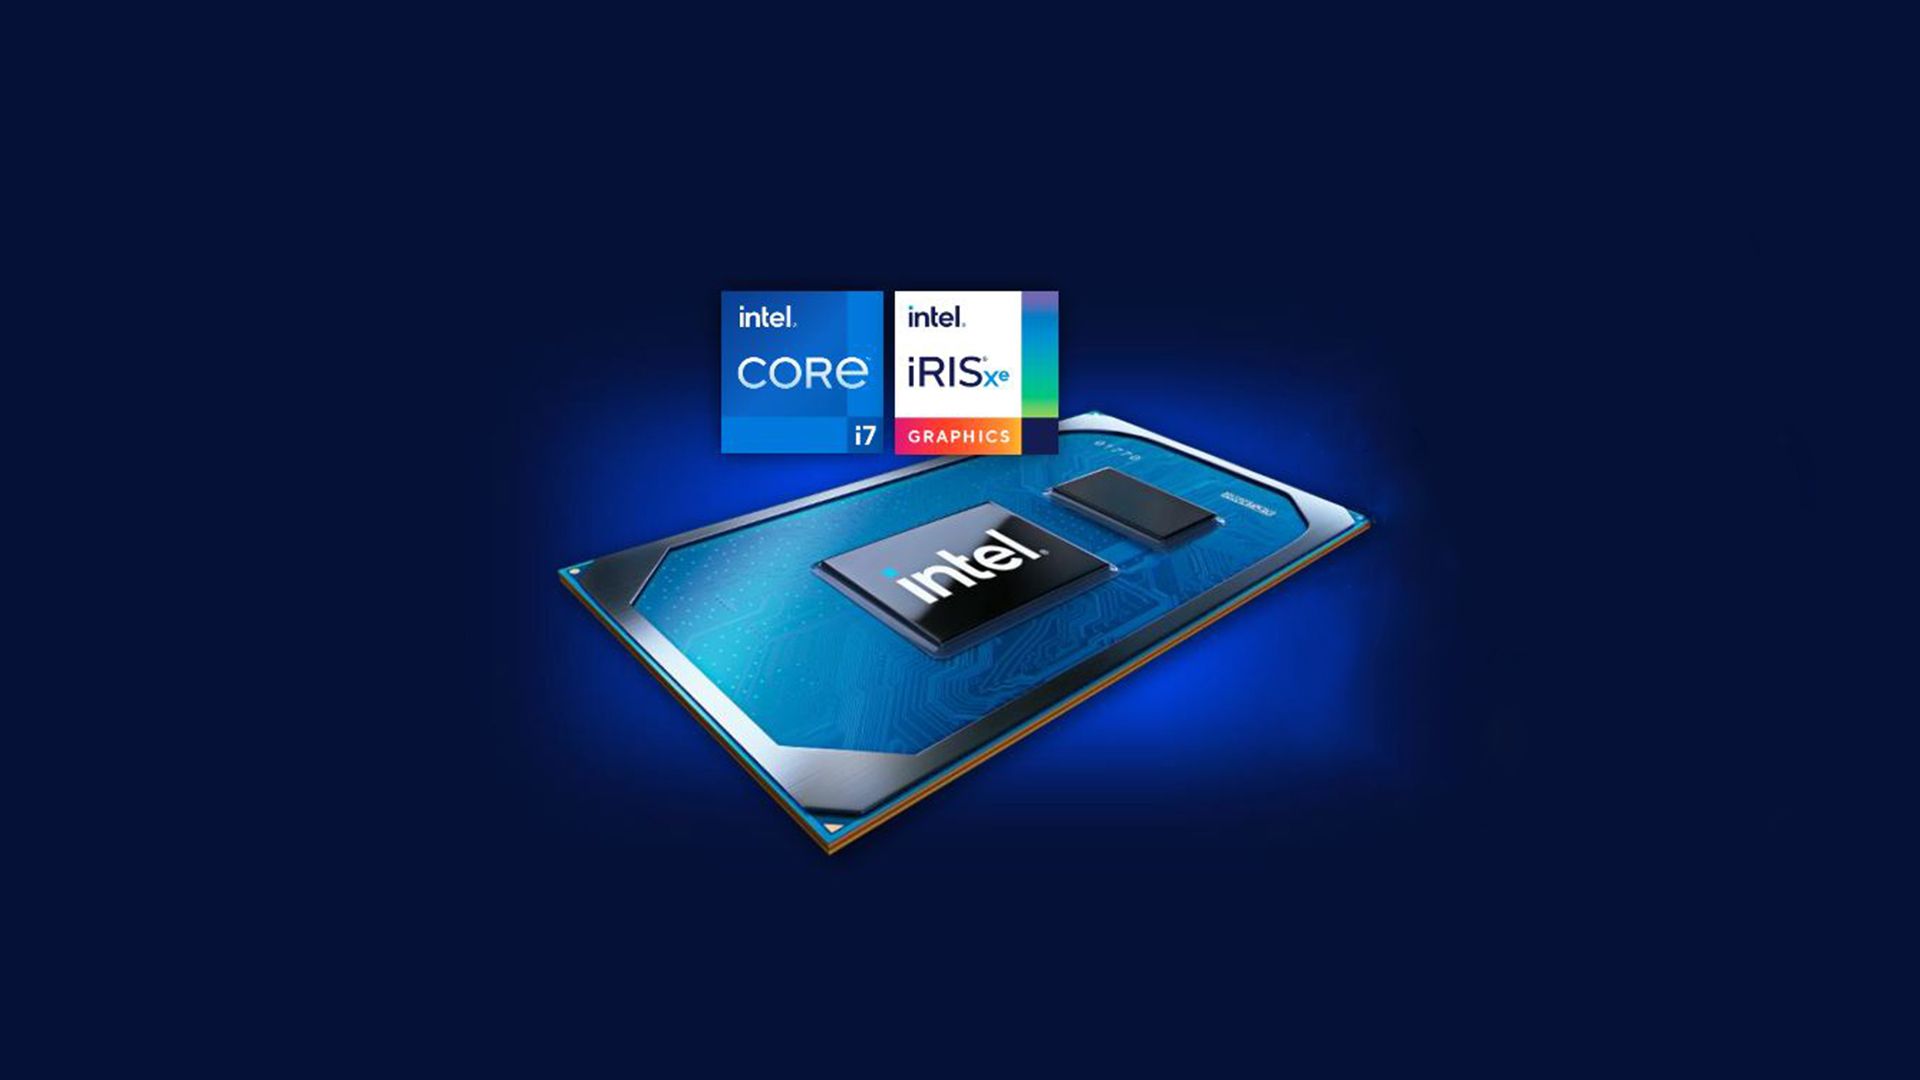 Intel mobile graphic. Видеокарты Intel Graphics xe. Интел Ирис Хе Графикс. Core i5 Intel Iris. Графический процессор Intel Iris xe Graphics.